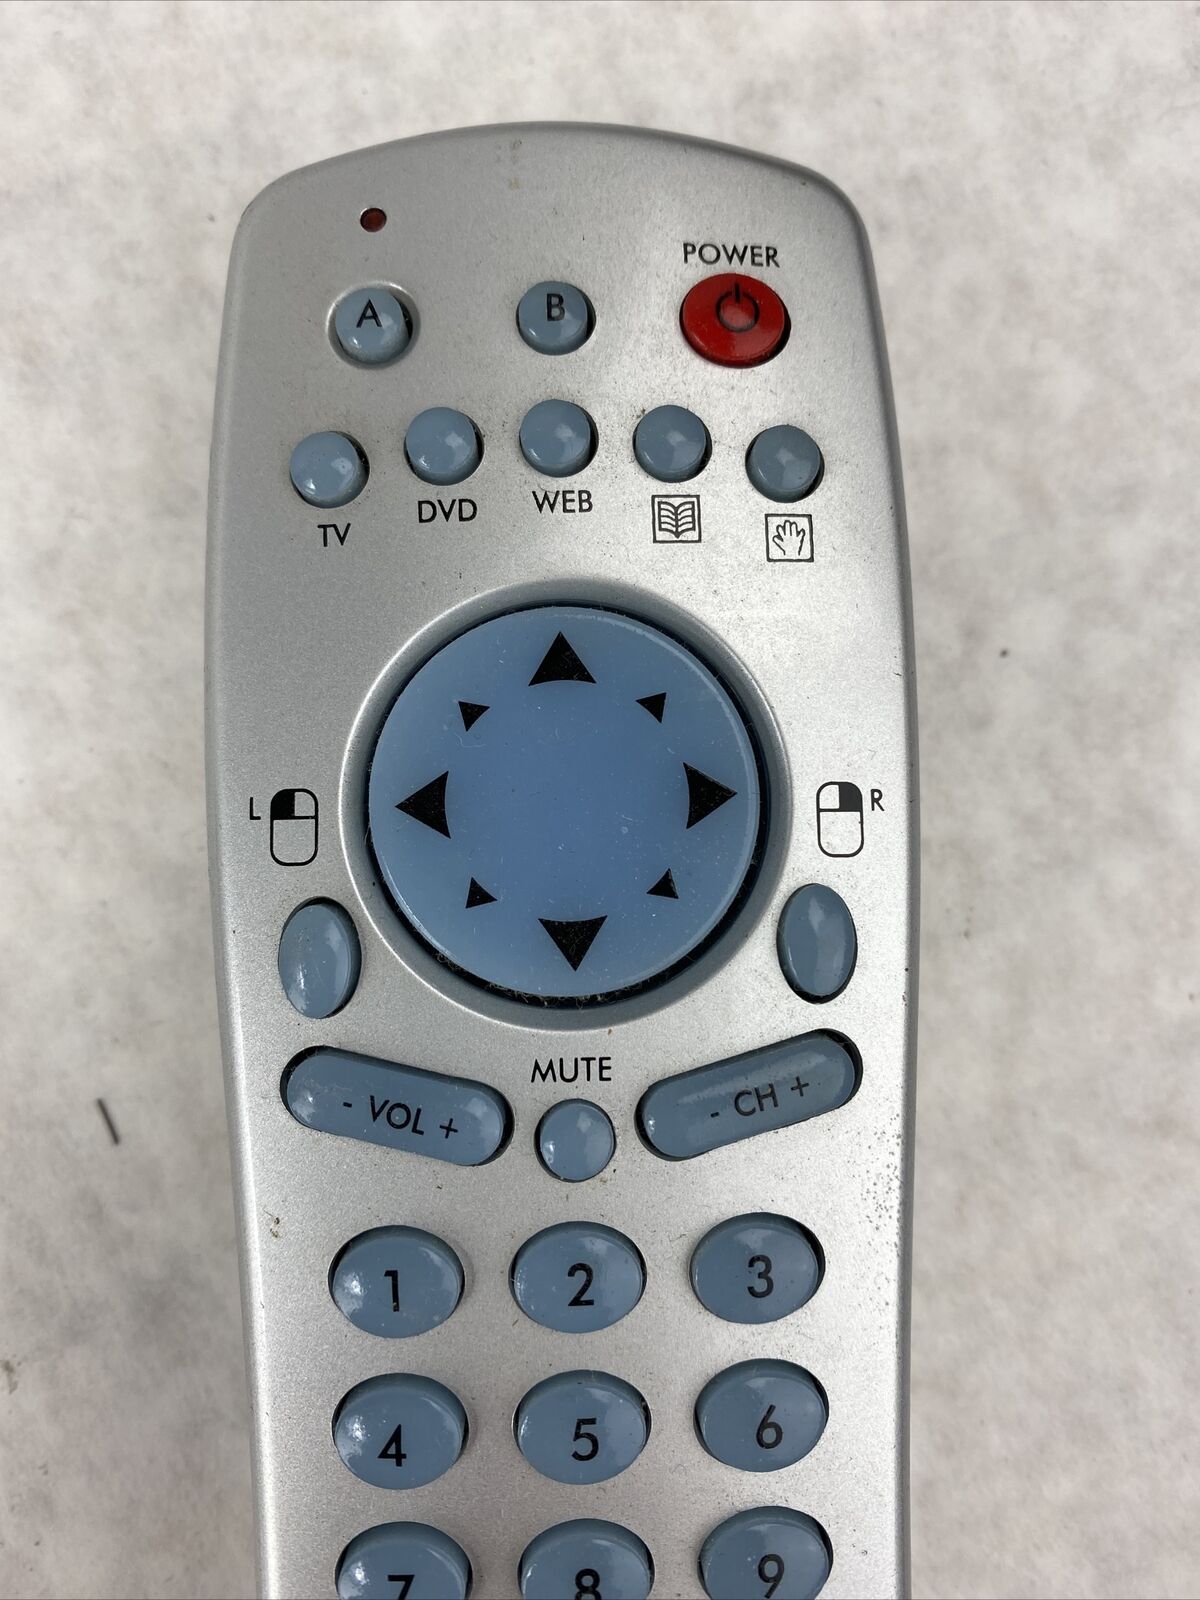 ATI 5000015900A Grey RF Wonder Remote Control TV Video Audio Access TESTED